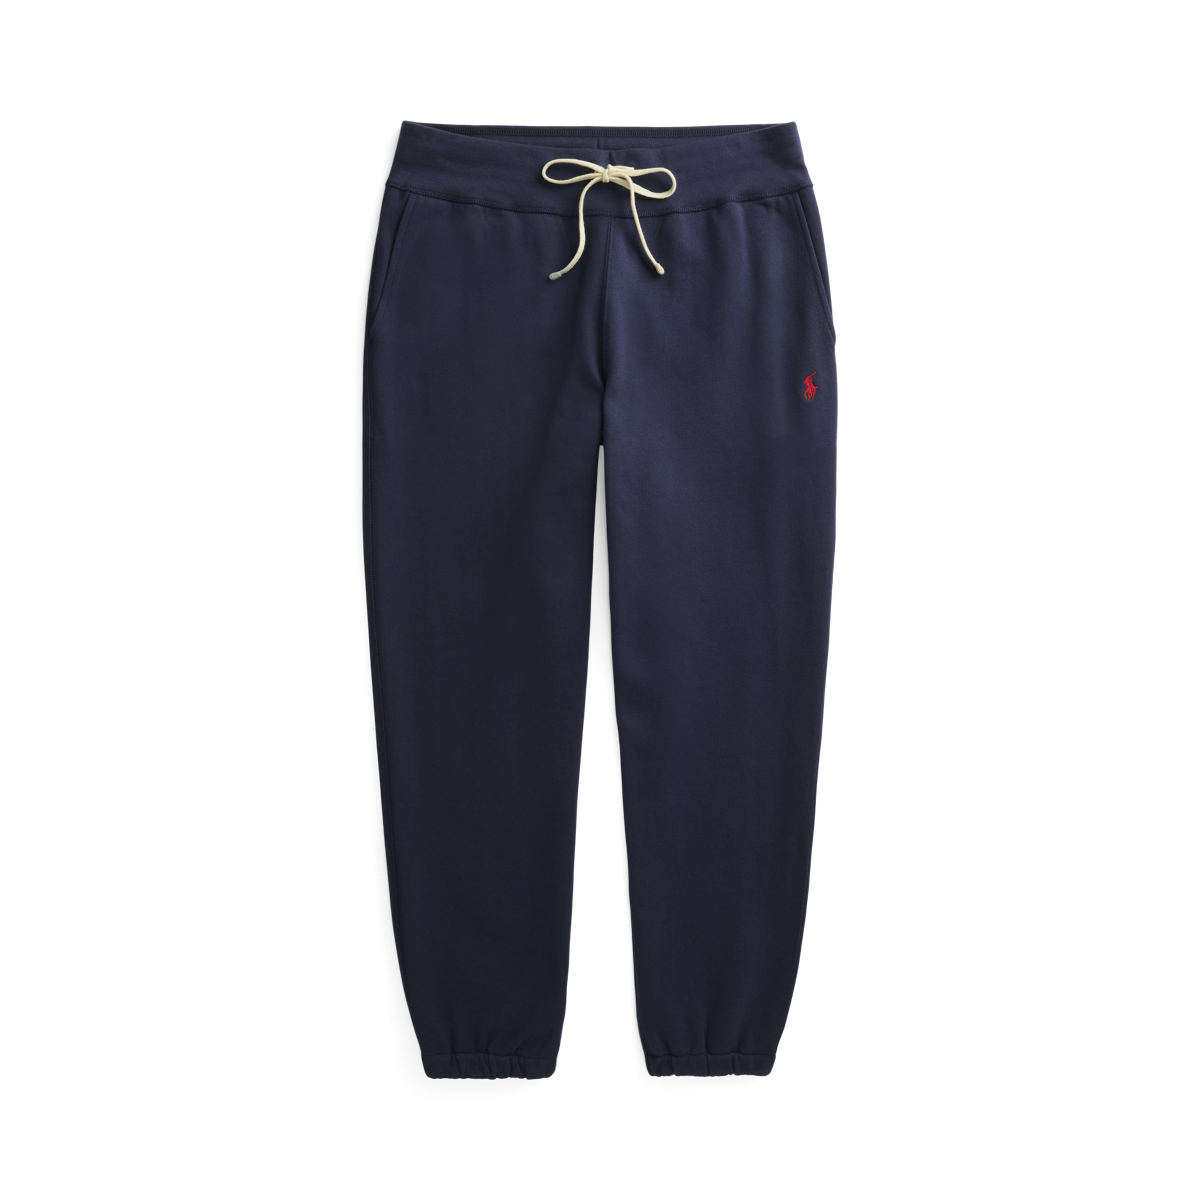 Polo Ralph Lauren Athletic Fleece Pants M3 Mens Small NWT!! - Heather Black